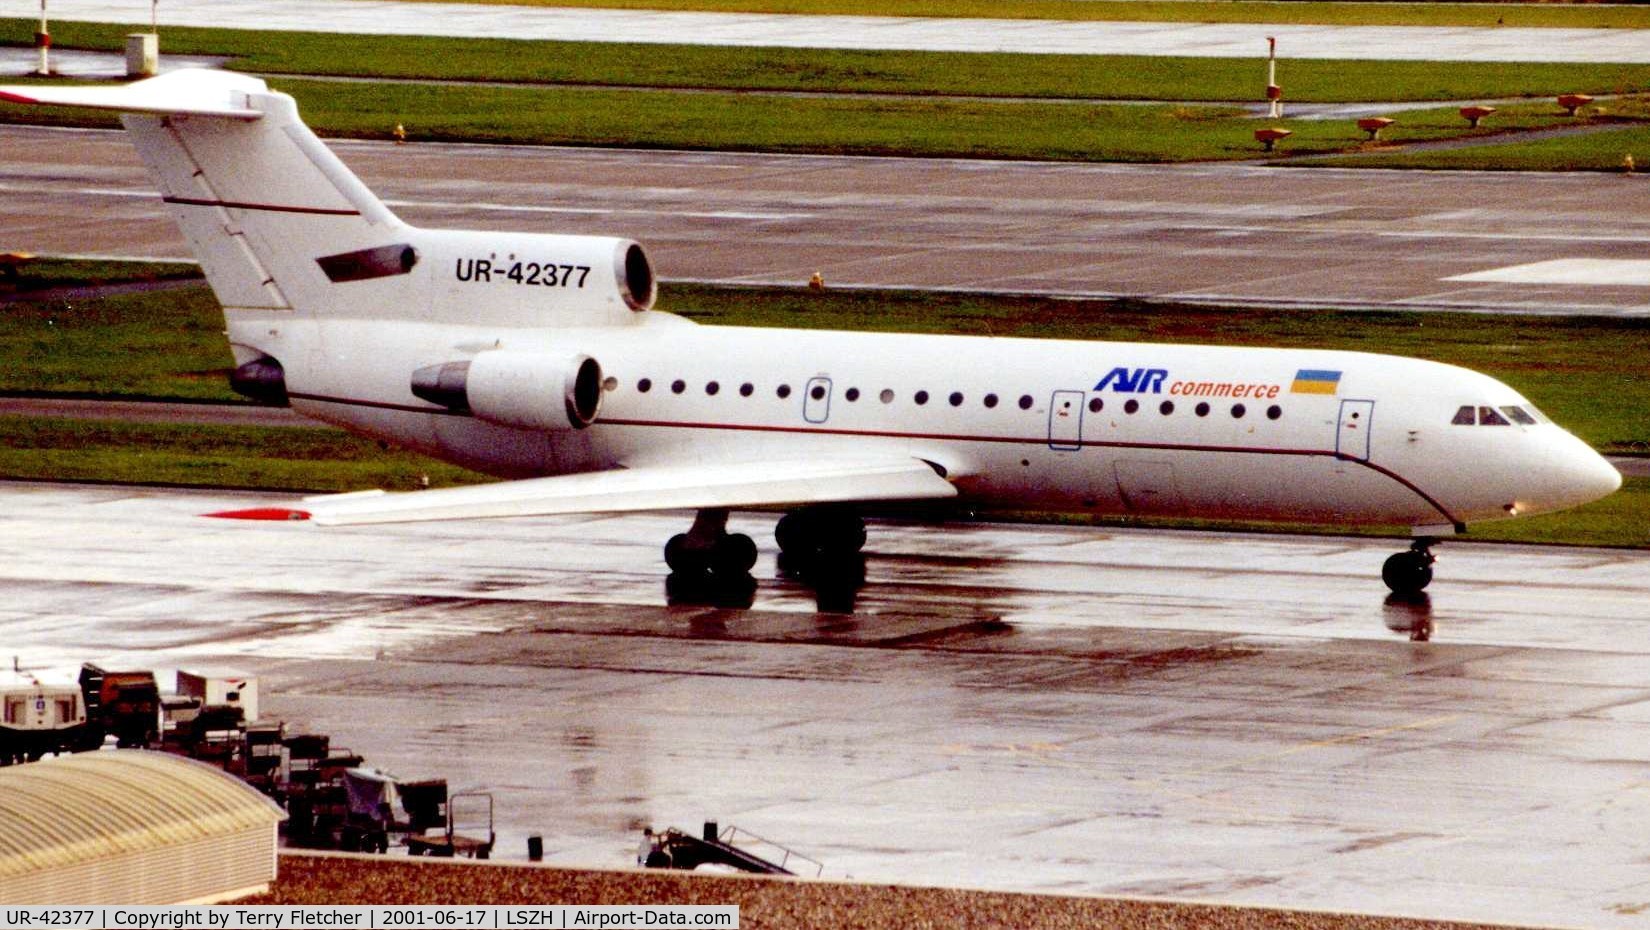 UR-42377, 1990 Yakovlev Yak-42D C/N 4520421014479, Air Commerce Yak 42 at Zurich in 2001